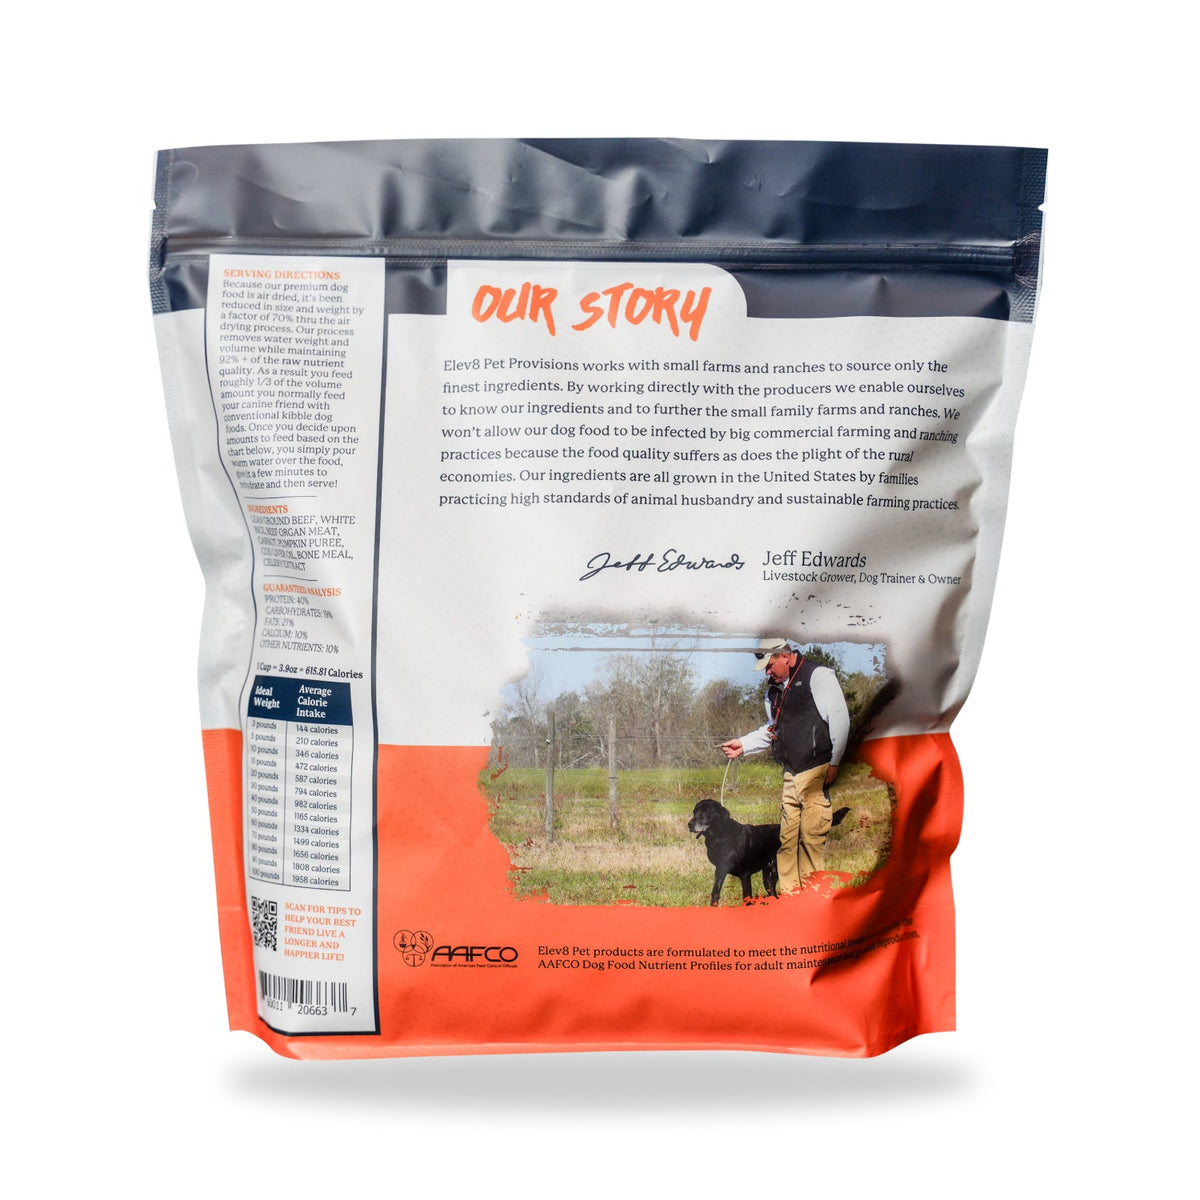 Sensitive Stomach Beef Recipe Dog Food - 1 Bag